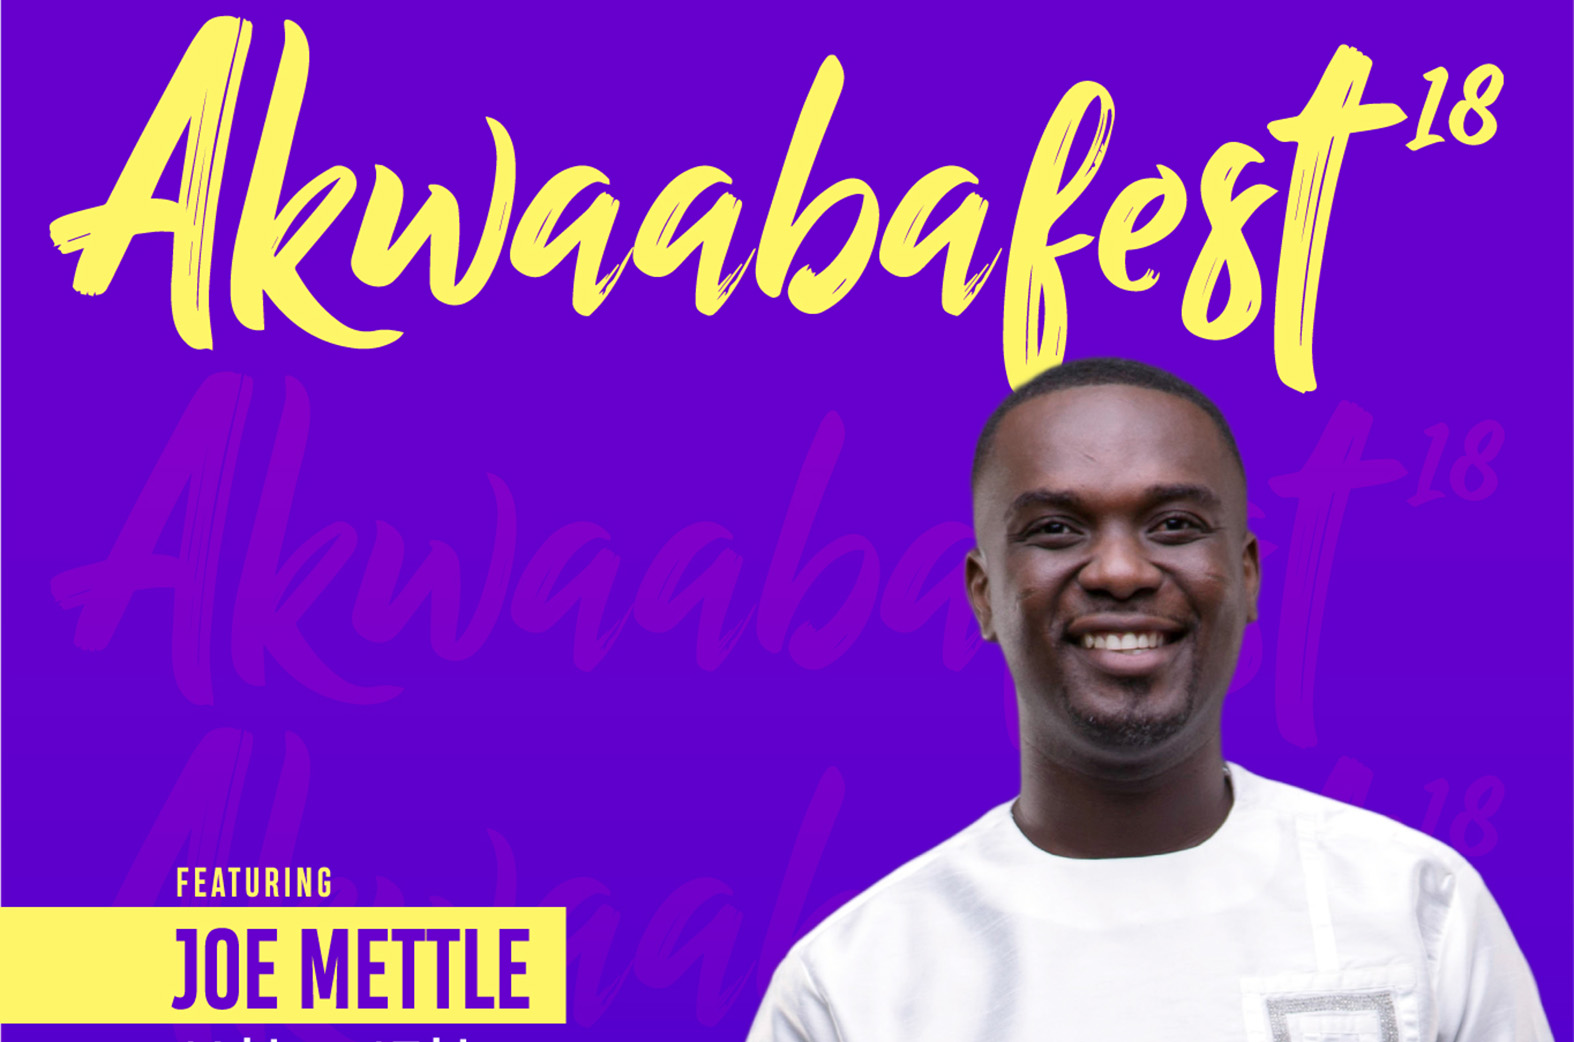 Joe Mettle to trill at KNUST AkwaabaFest 2018